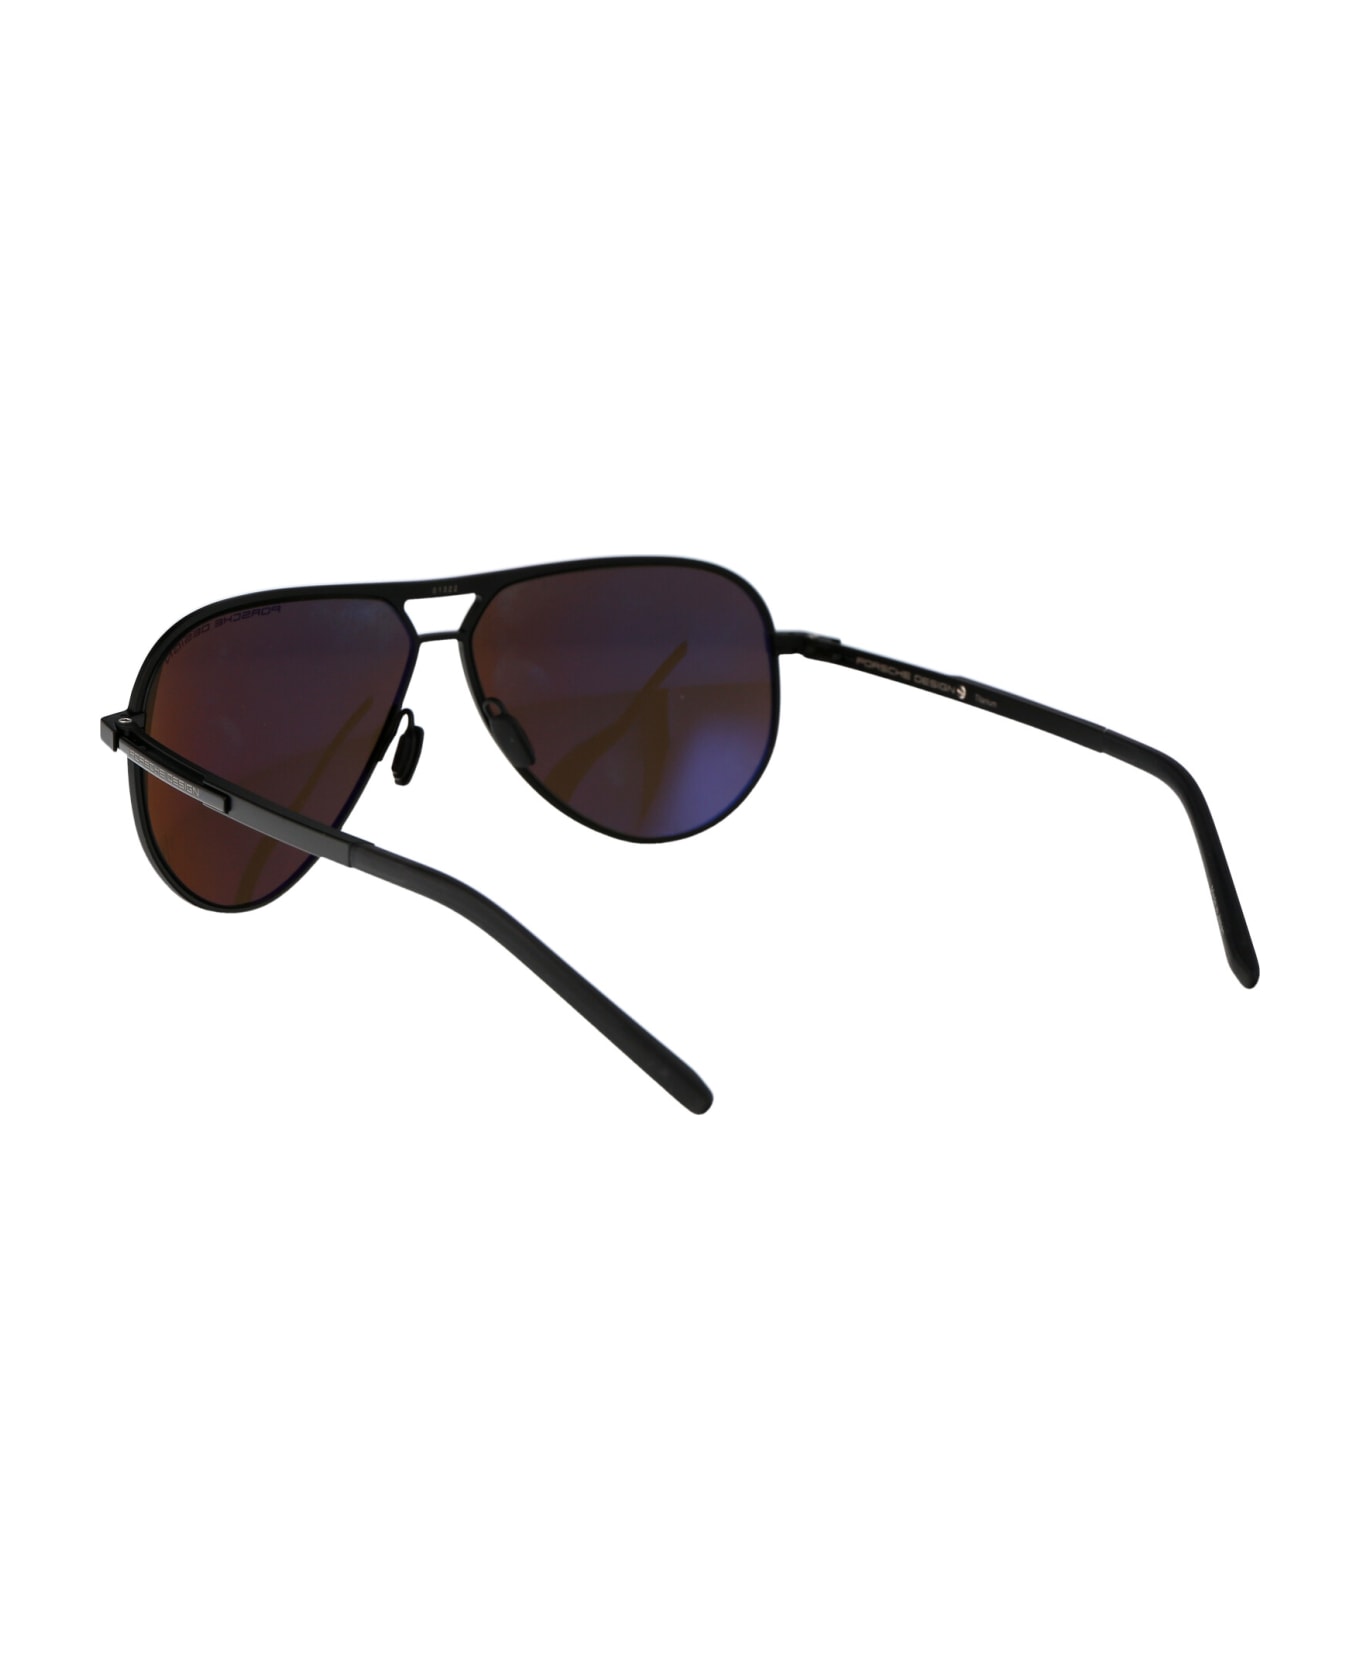 Porsche Design P8942 Sunglasses - A604 BLACK